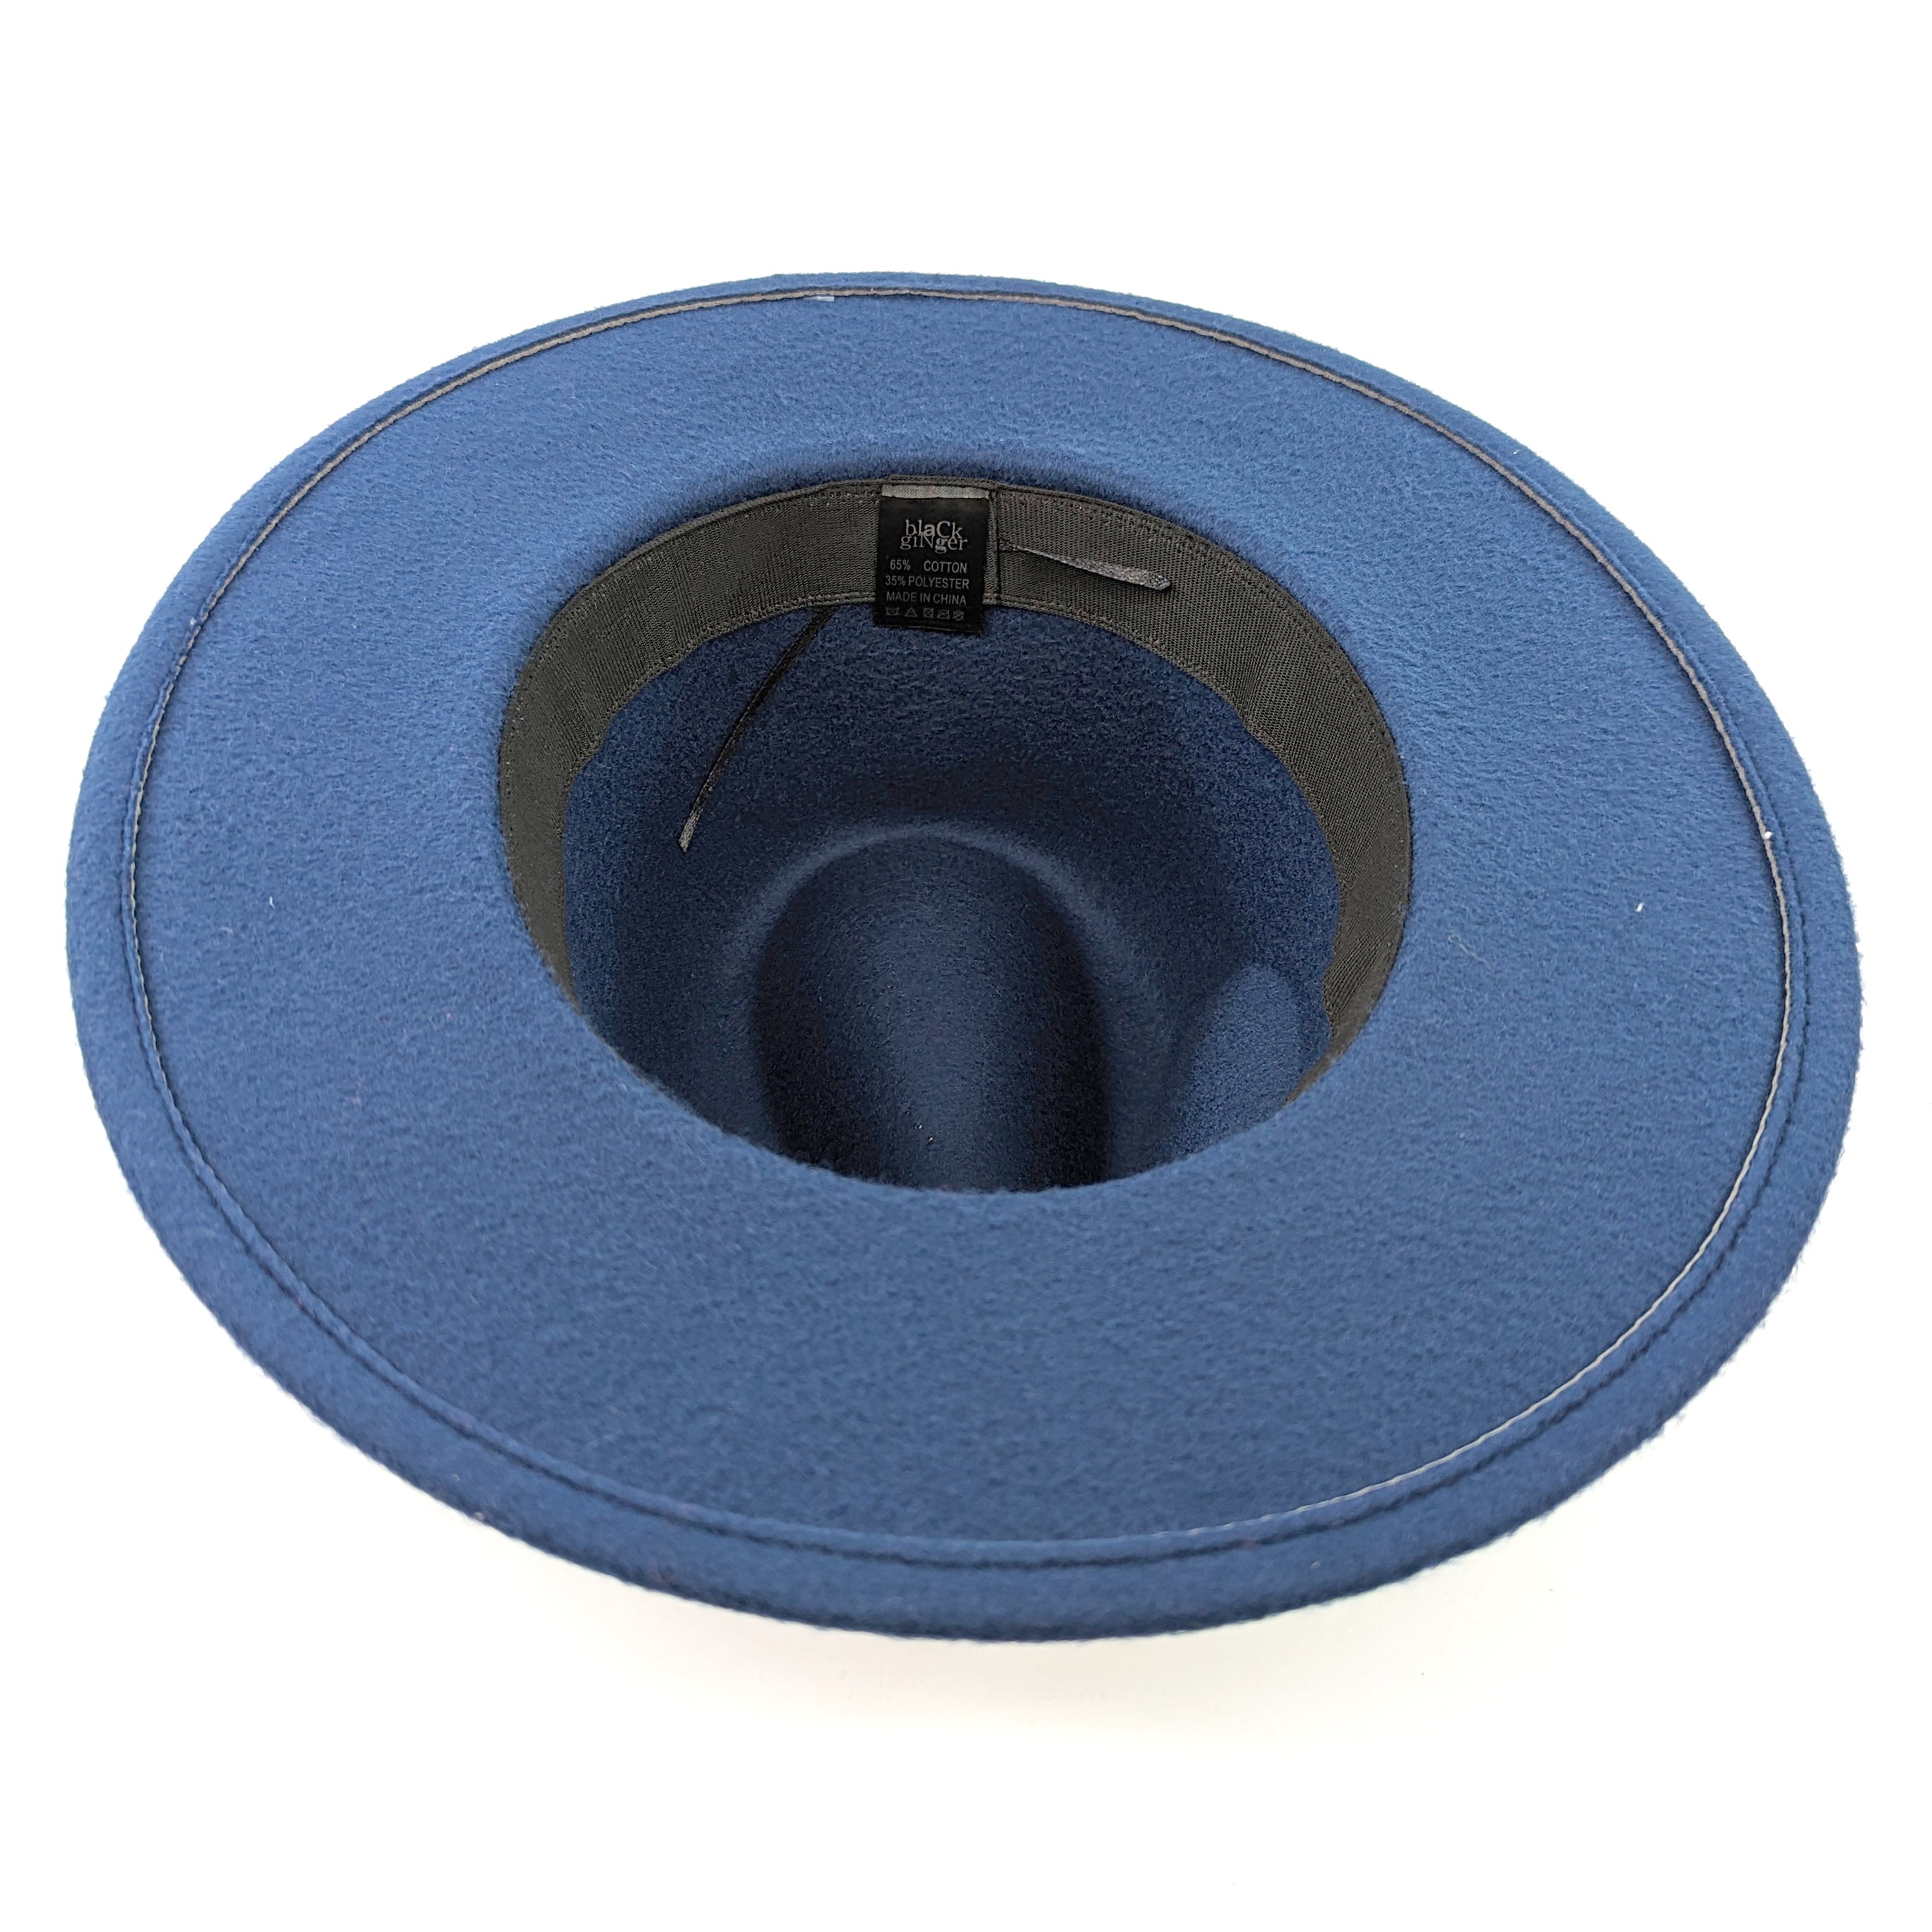 Chapeau Fedora Bleu / Bleu Royal